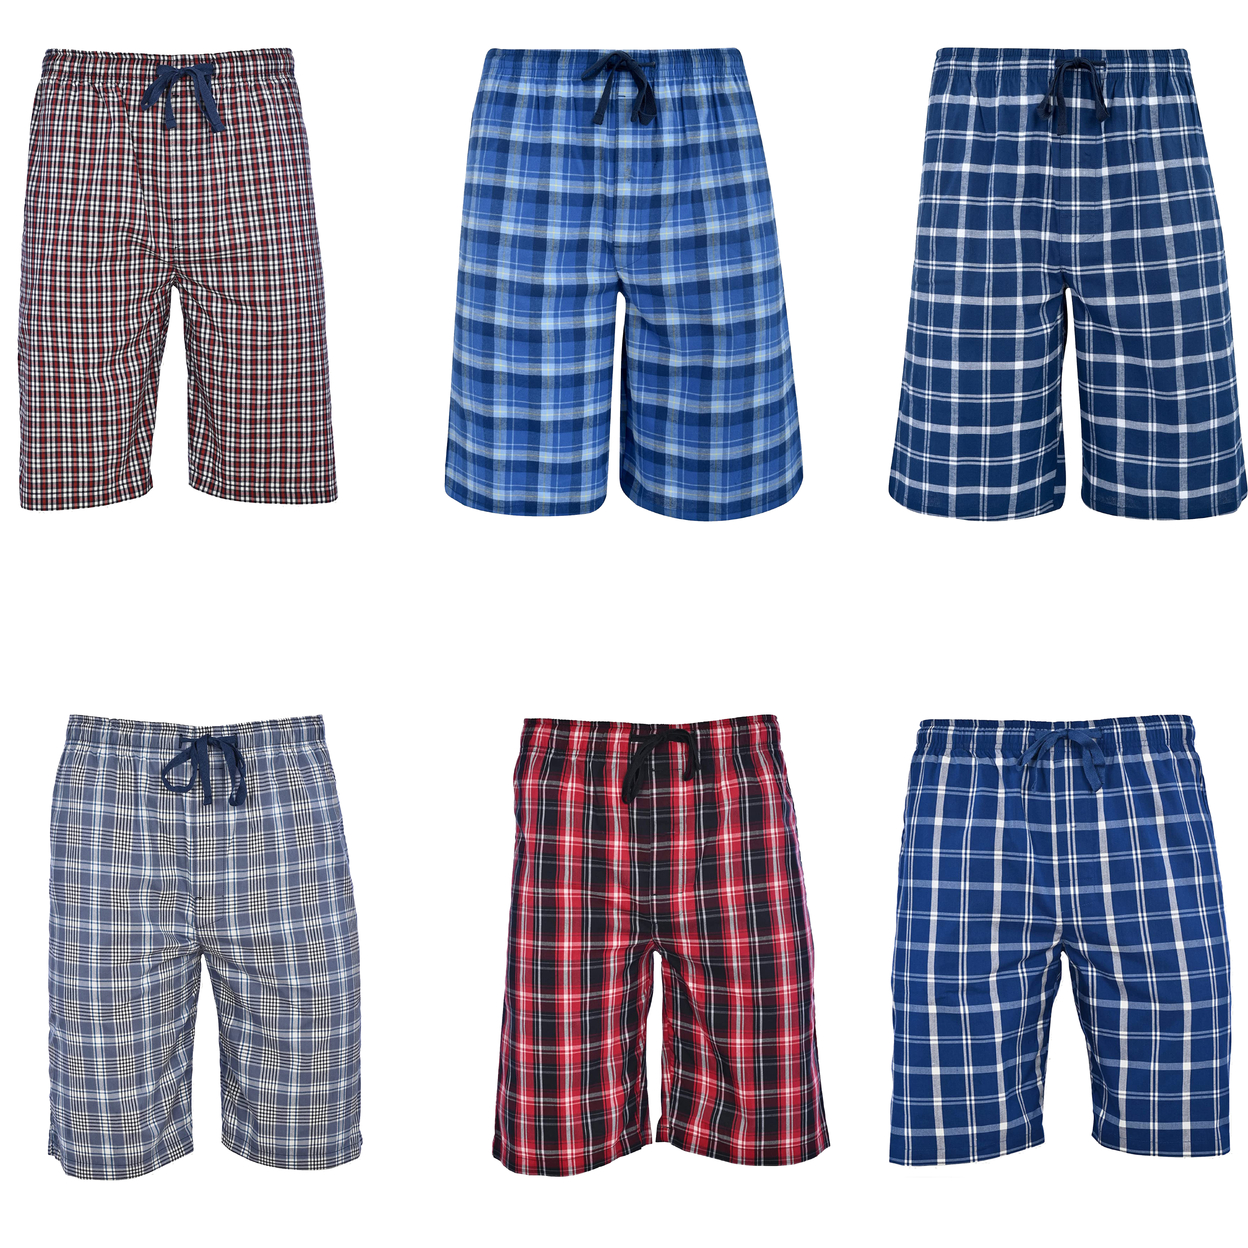 2-Pack: Men's Ultra Soft Plaid Lounge Pajama Sleep Wear Shorts - Red & Blue, Medium